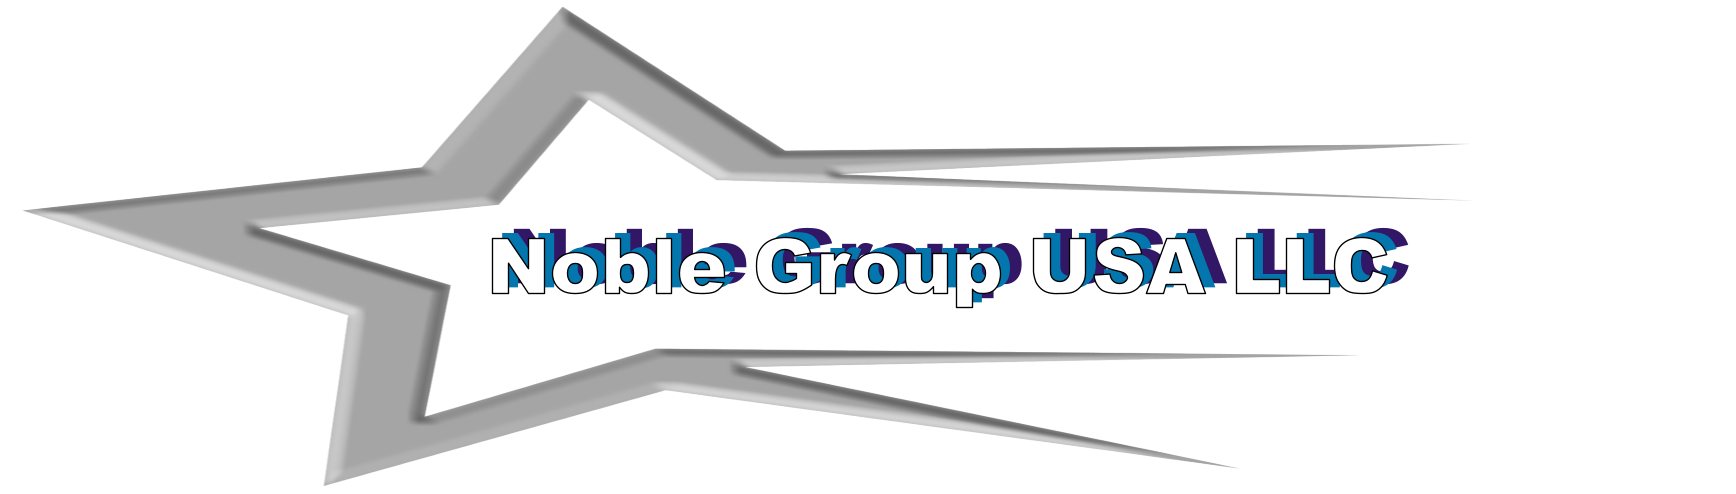 Noble Group USA LLC